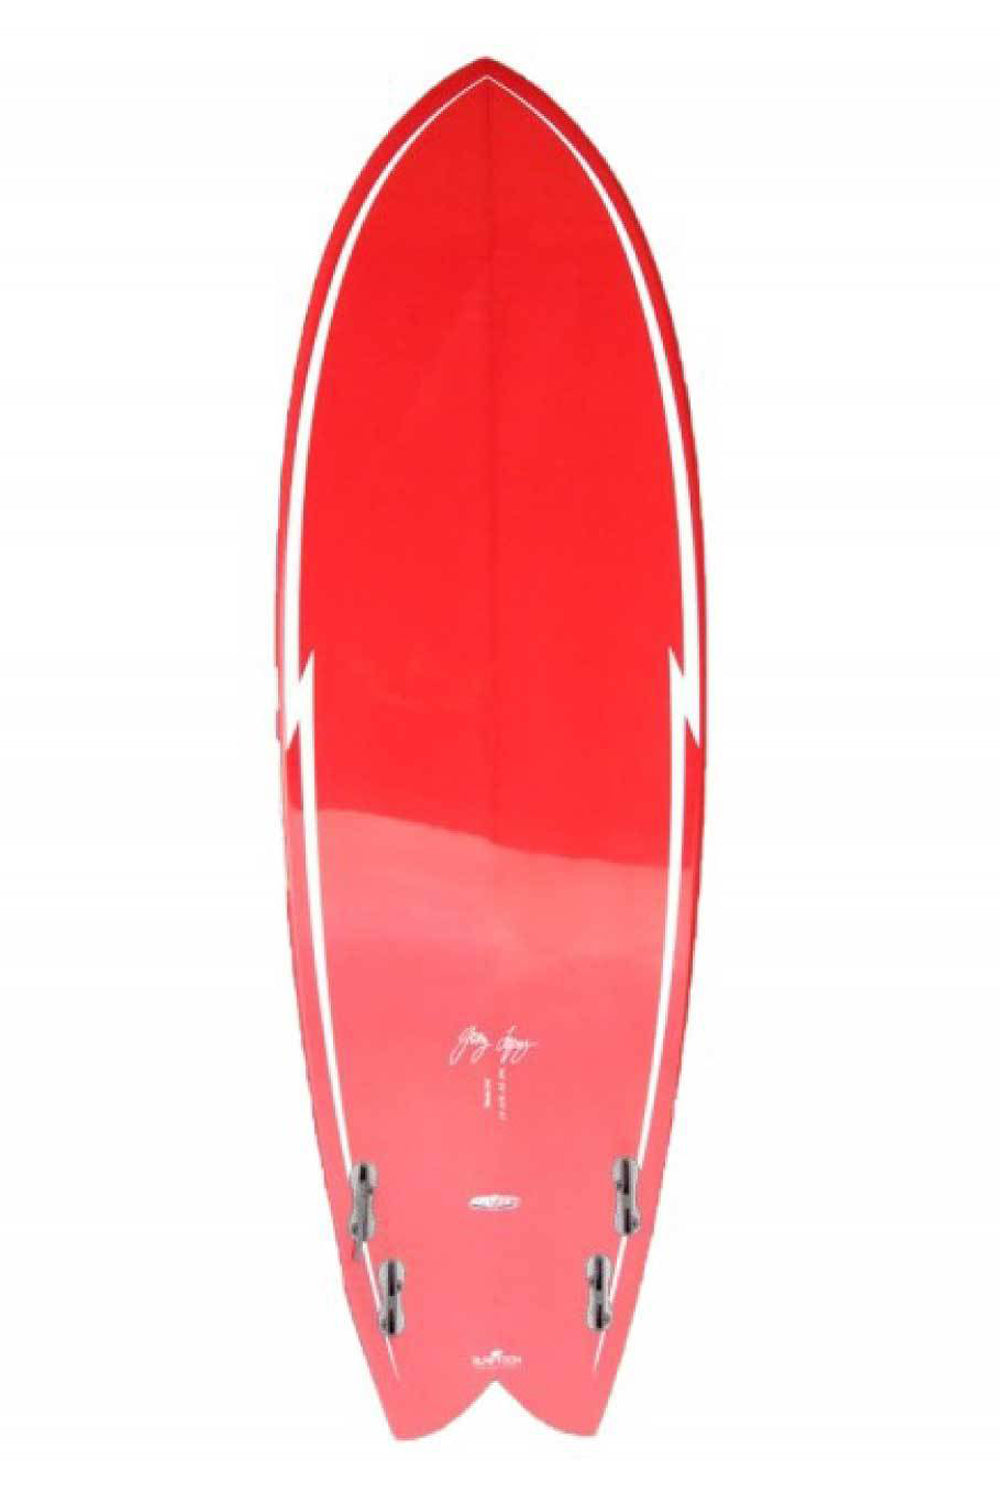 Gerry Lopez Something Fishy Quad Surfboard